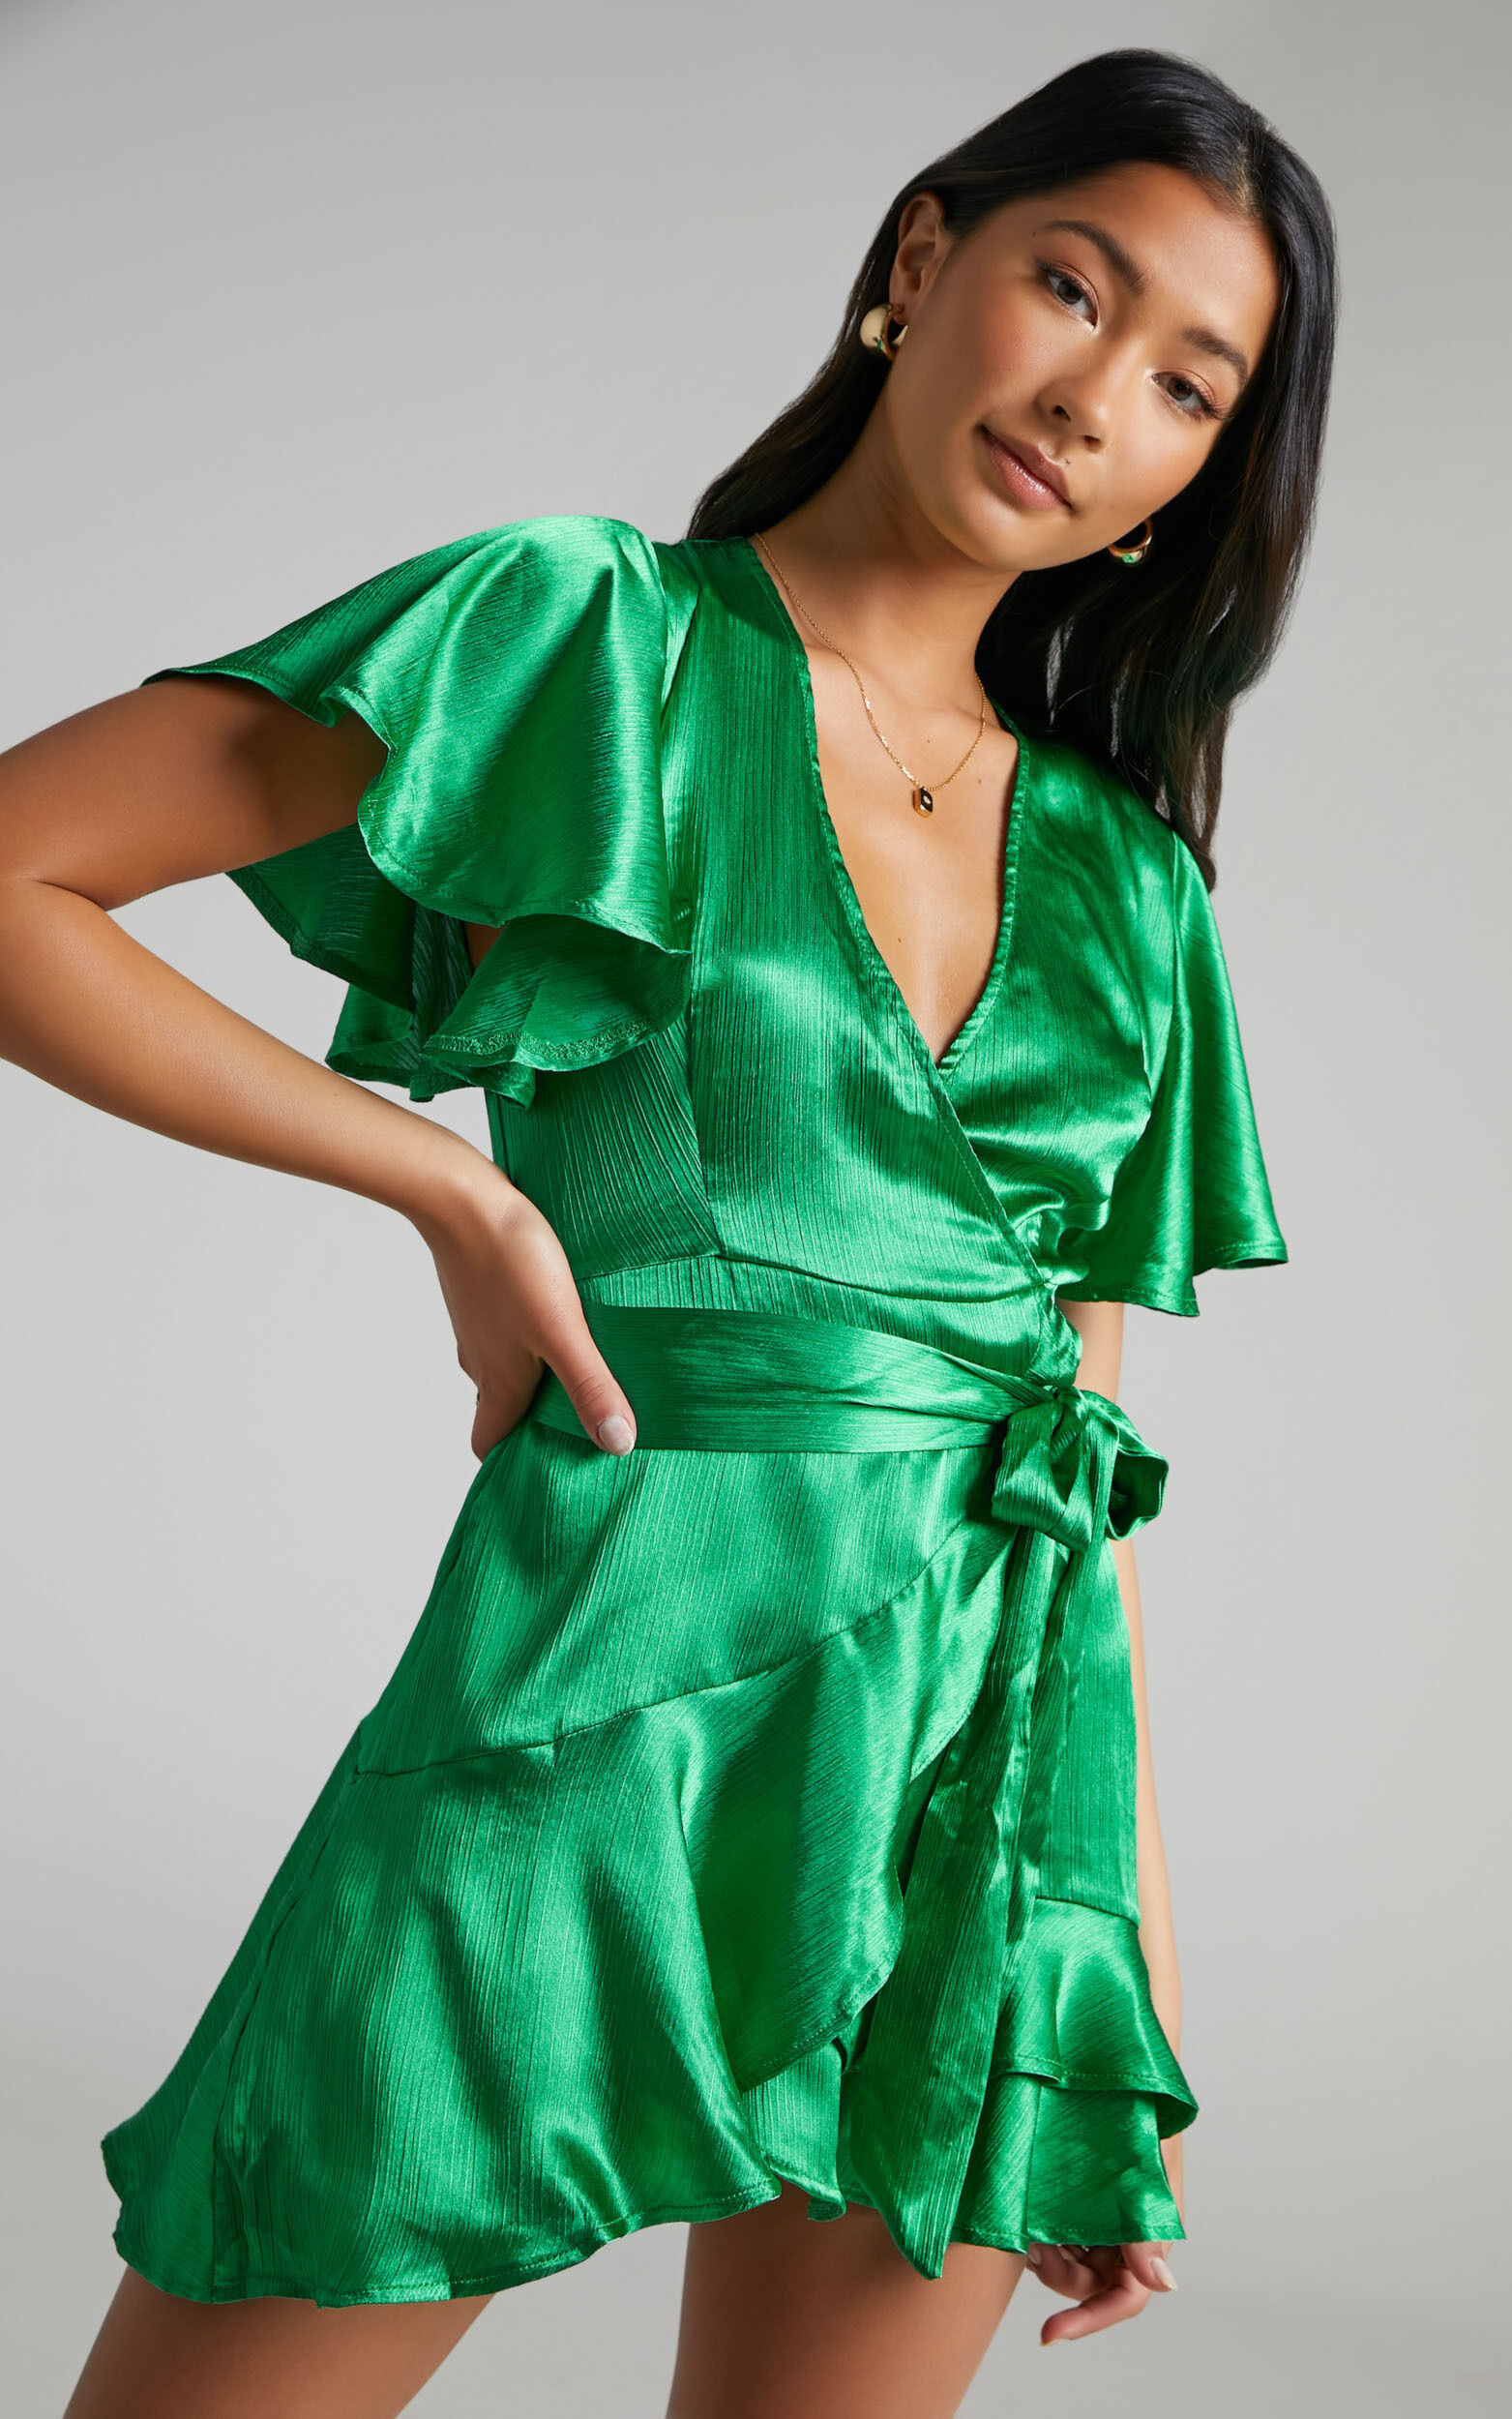 green satin dress